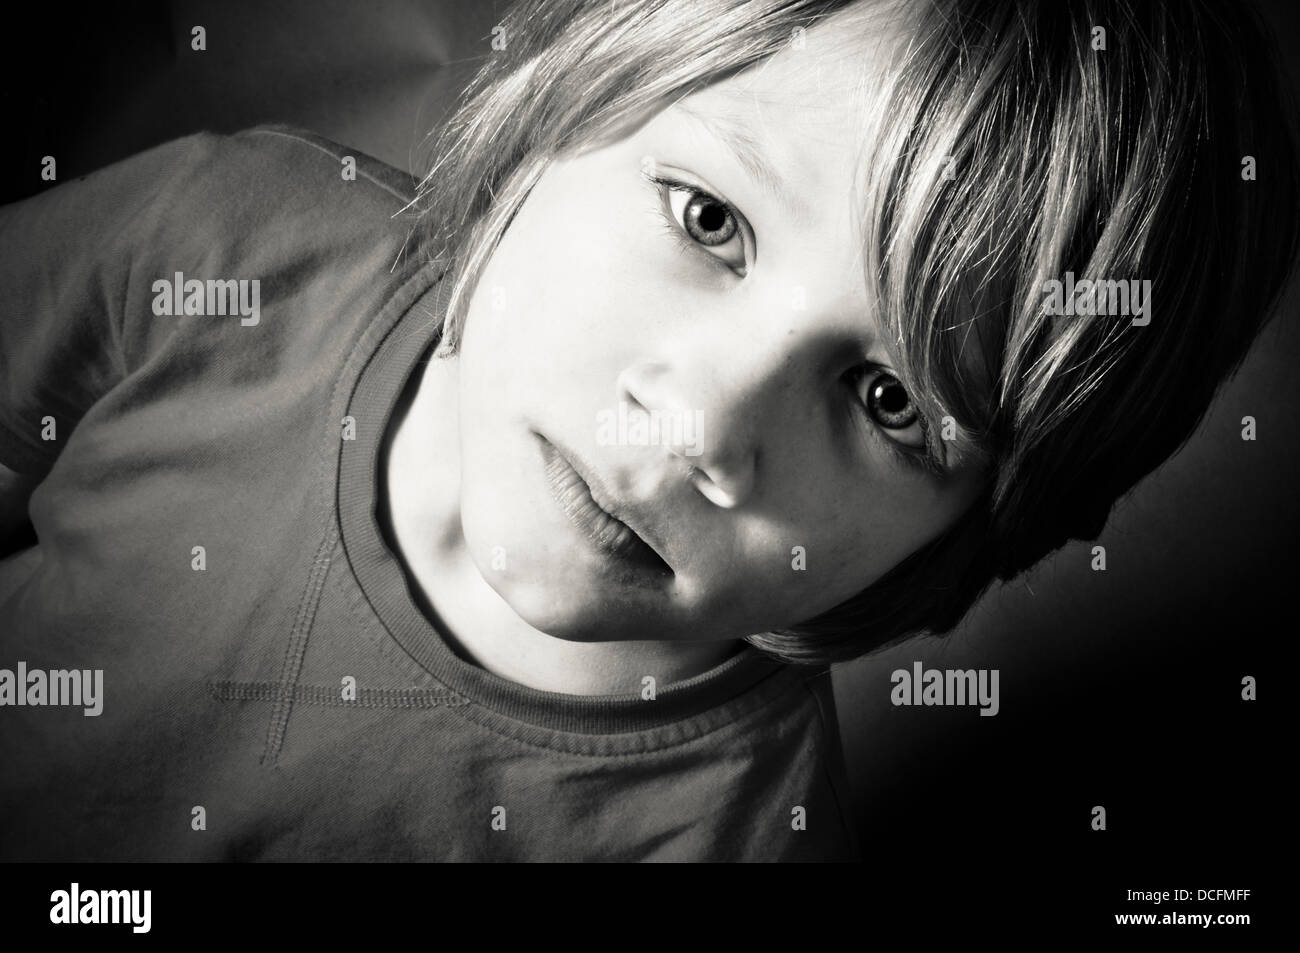 Child abuse victim Stock Photo